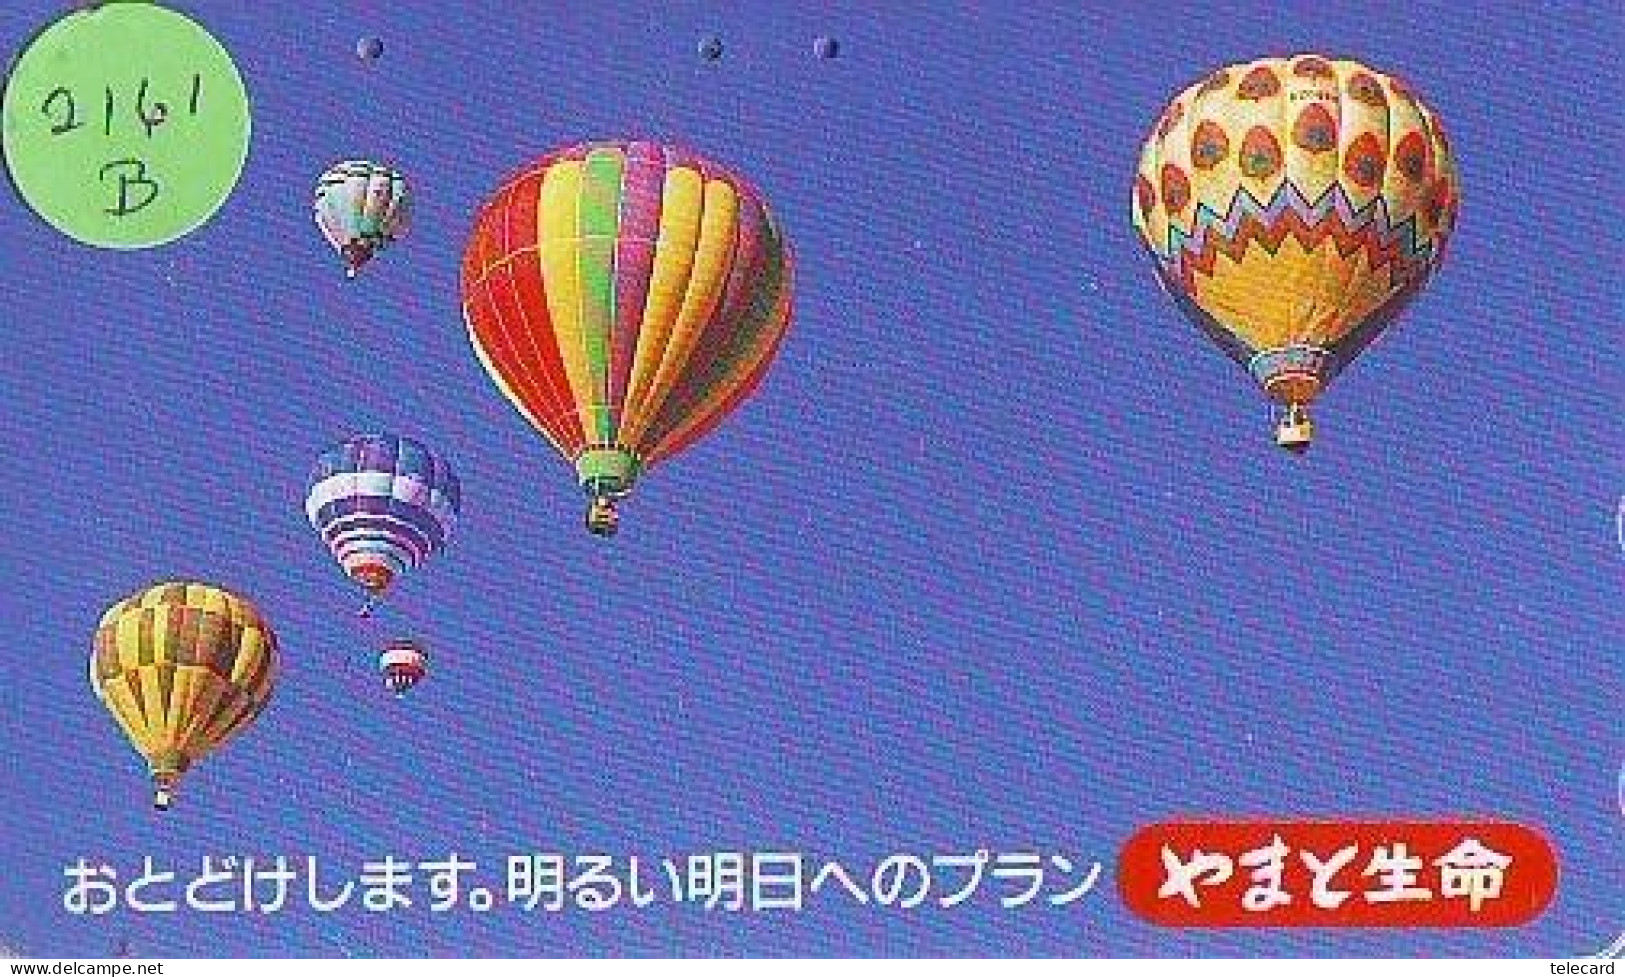 Telecarte JAPON * (2161b) BALLON * MONTGOLFIERE - Hot Air Balloon * Aerostato * Heißluft PHONECARD JAPAN - - Deportes